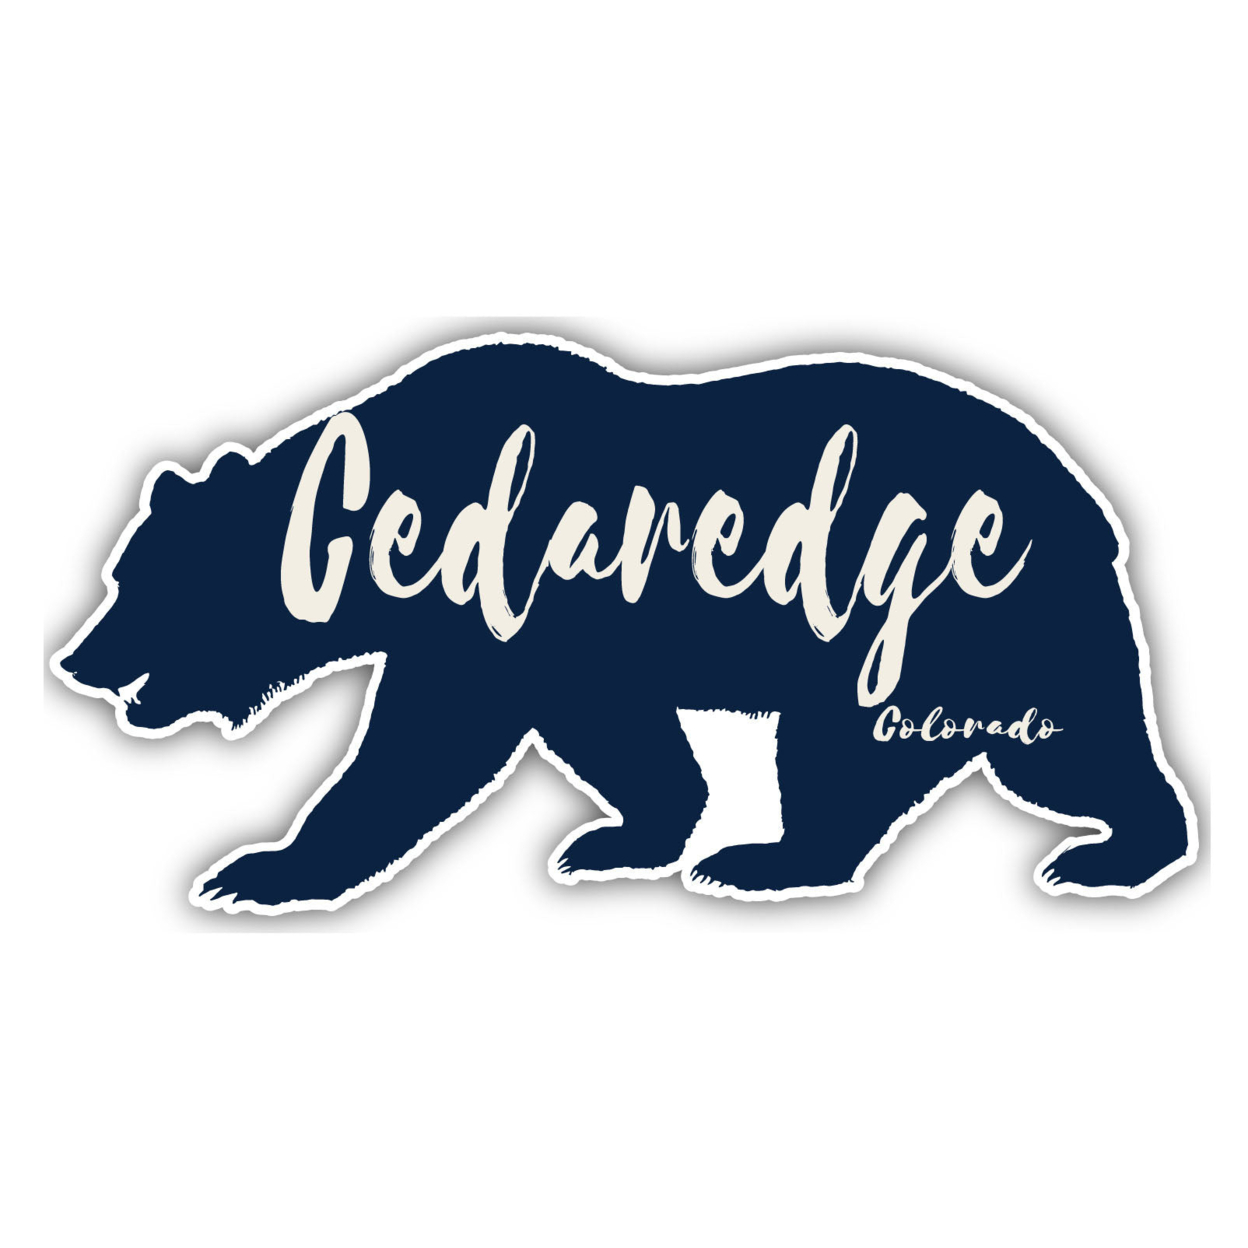 Cedaredge Colorado Souvenir Decorative Stickers (Choose Theme And Size) - 4-Pack, 2-Inch, Bear